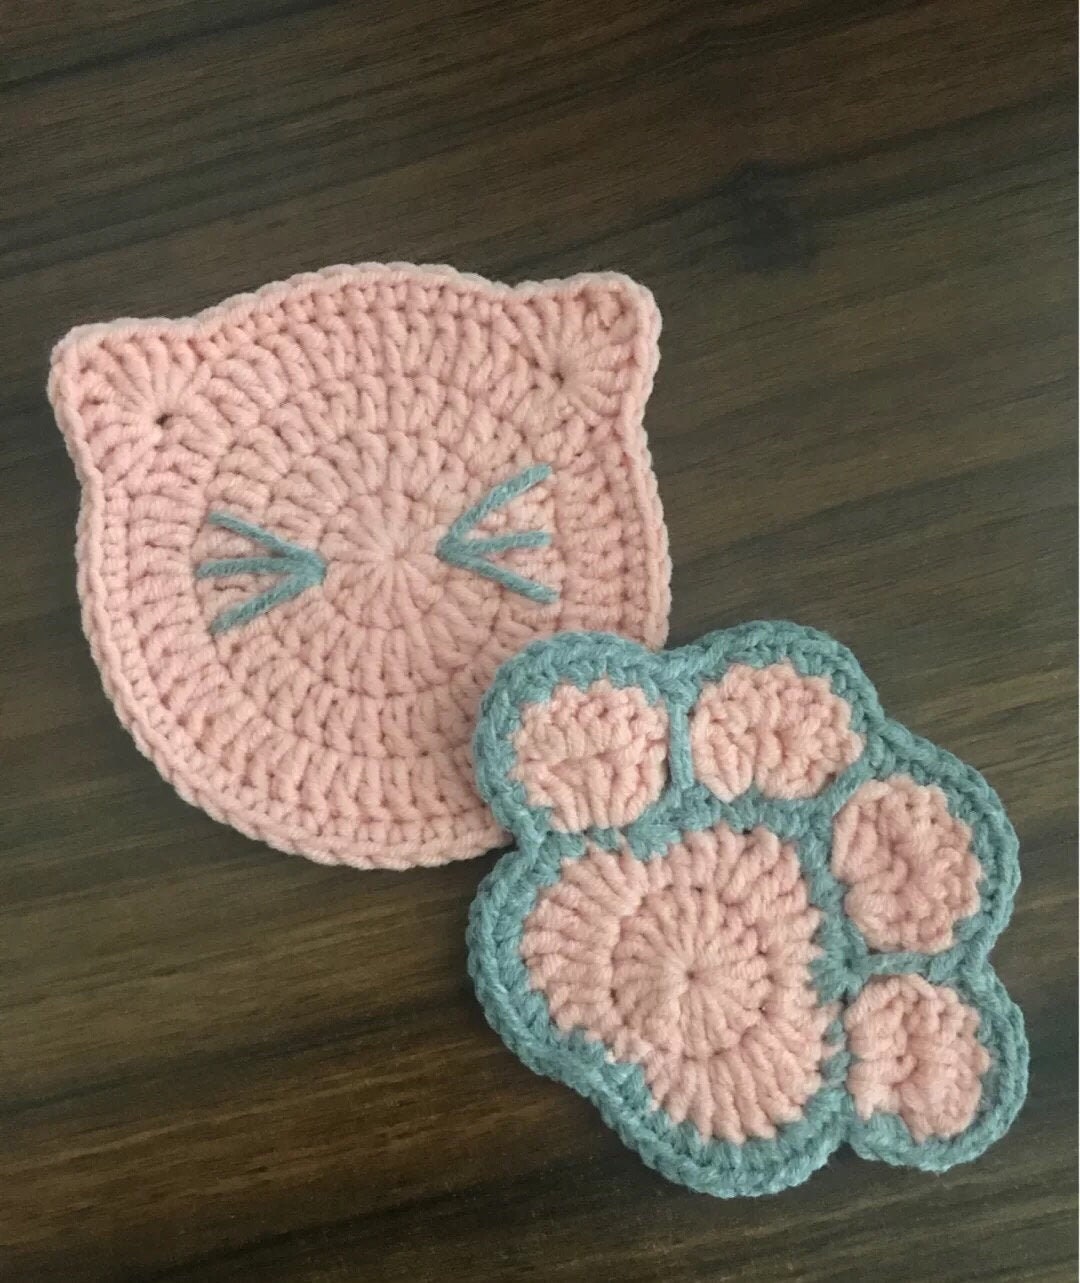 Cat Car Cup Holder Coaster 2: Crochet pattern